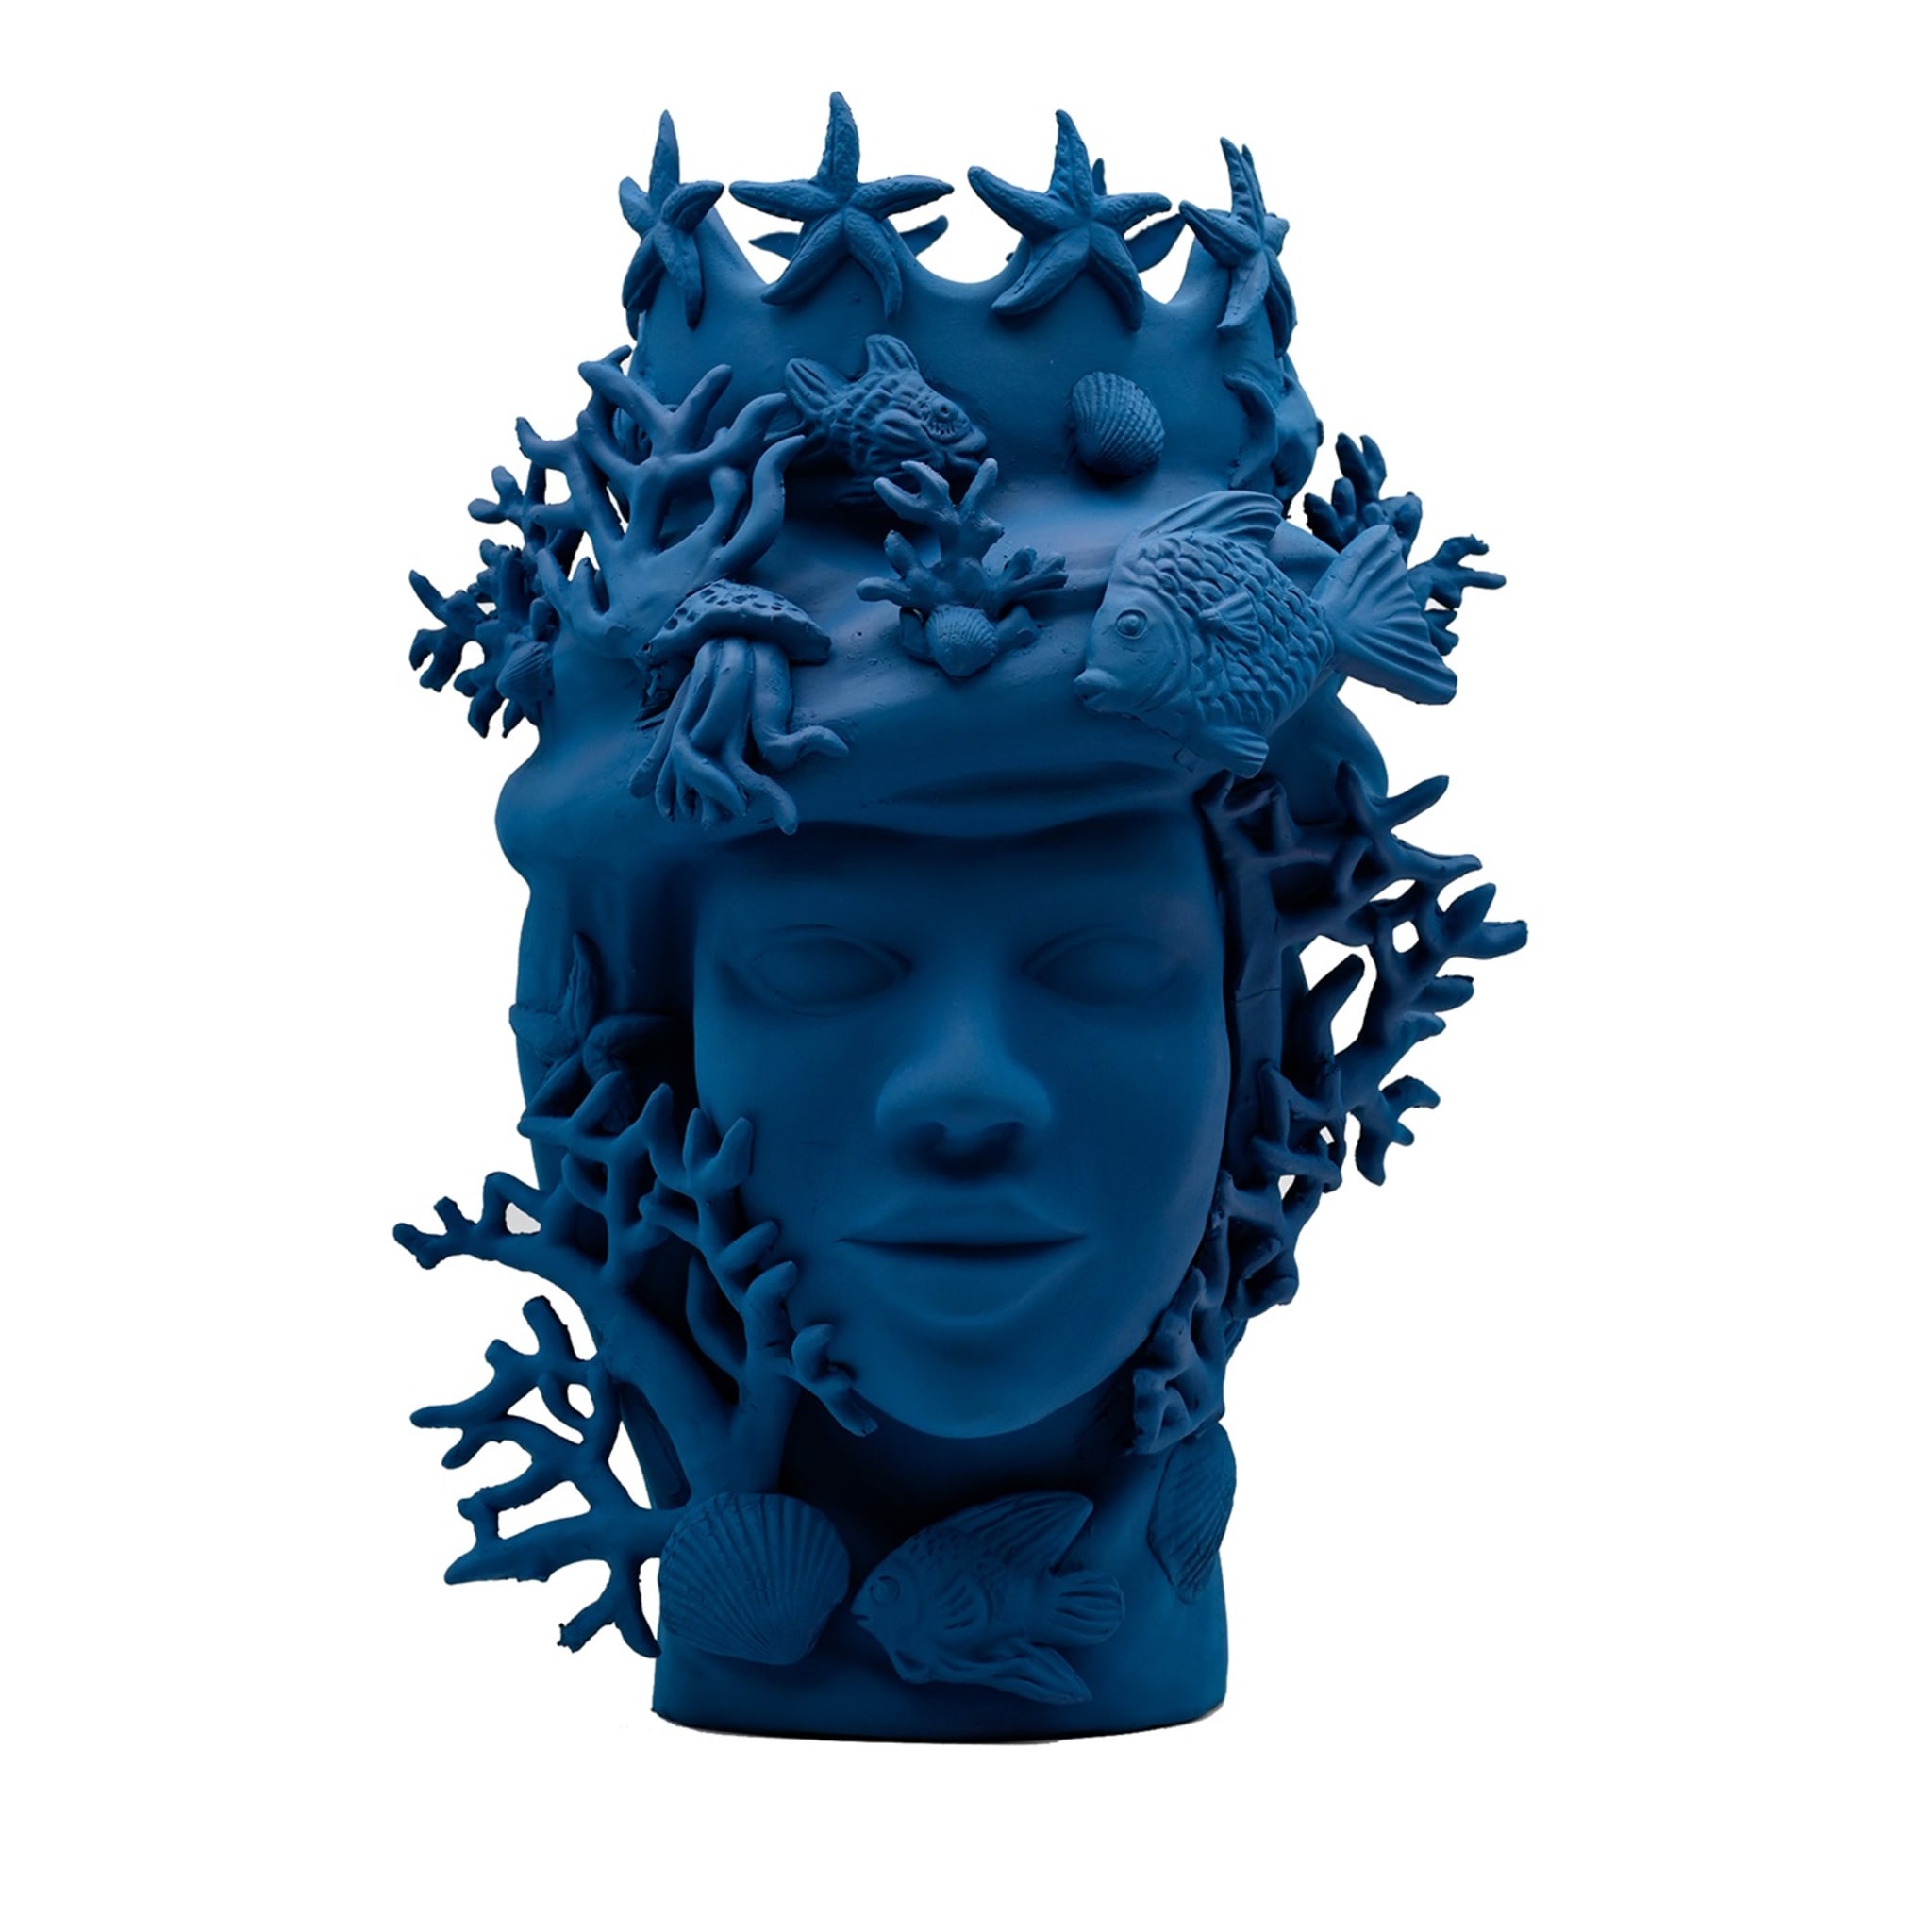 Moor's Head Royal Blue Handmade Sculpture